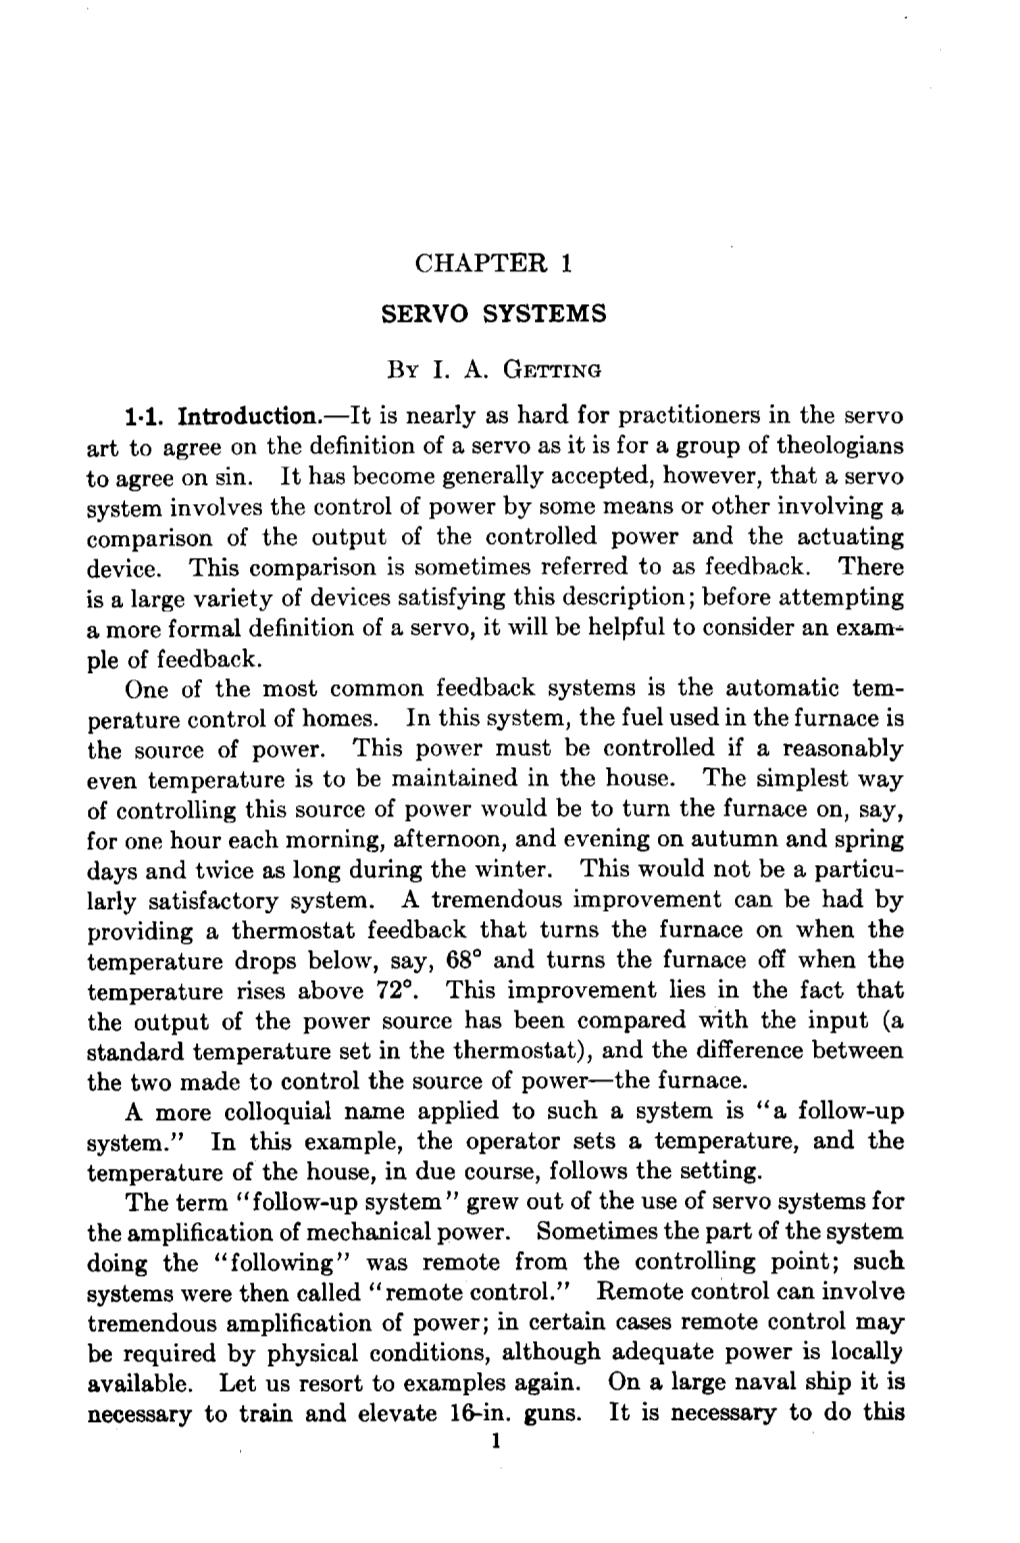 Theory of Servomechanisms 1946